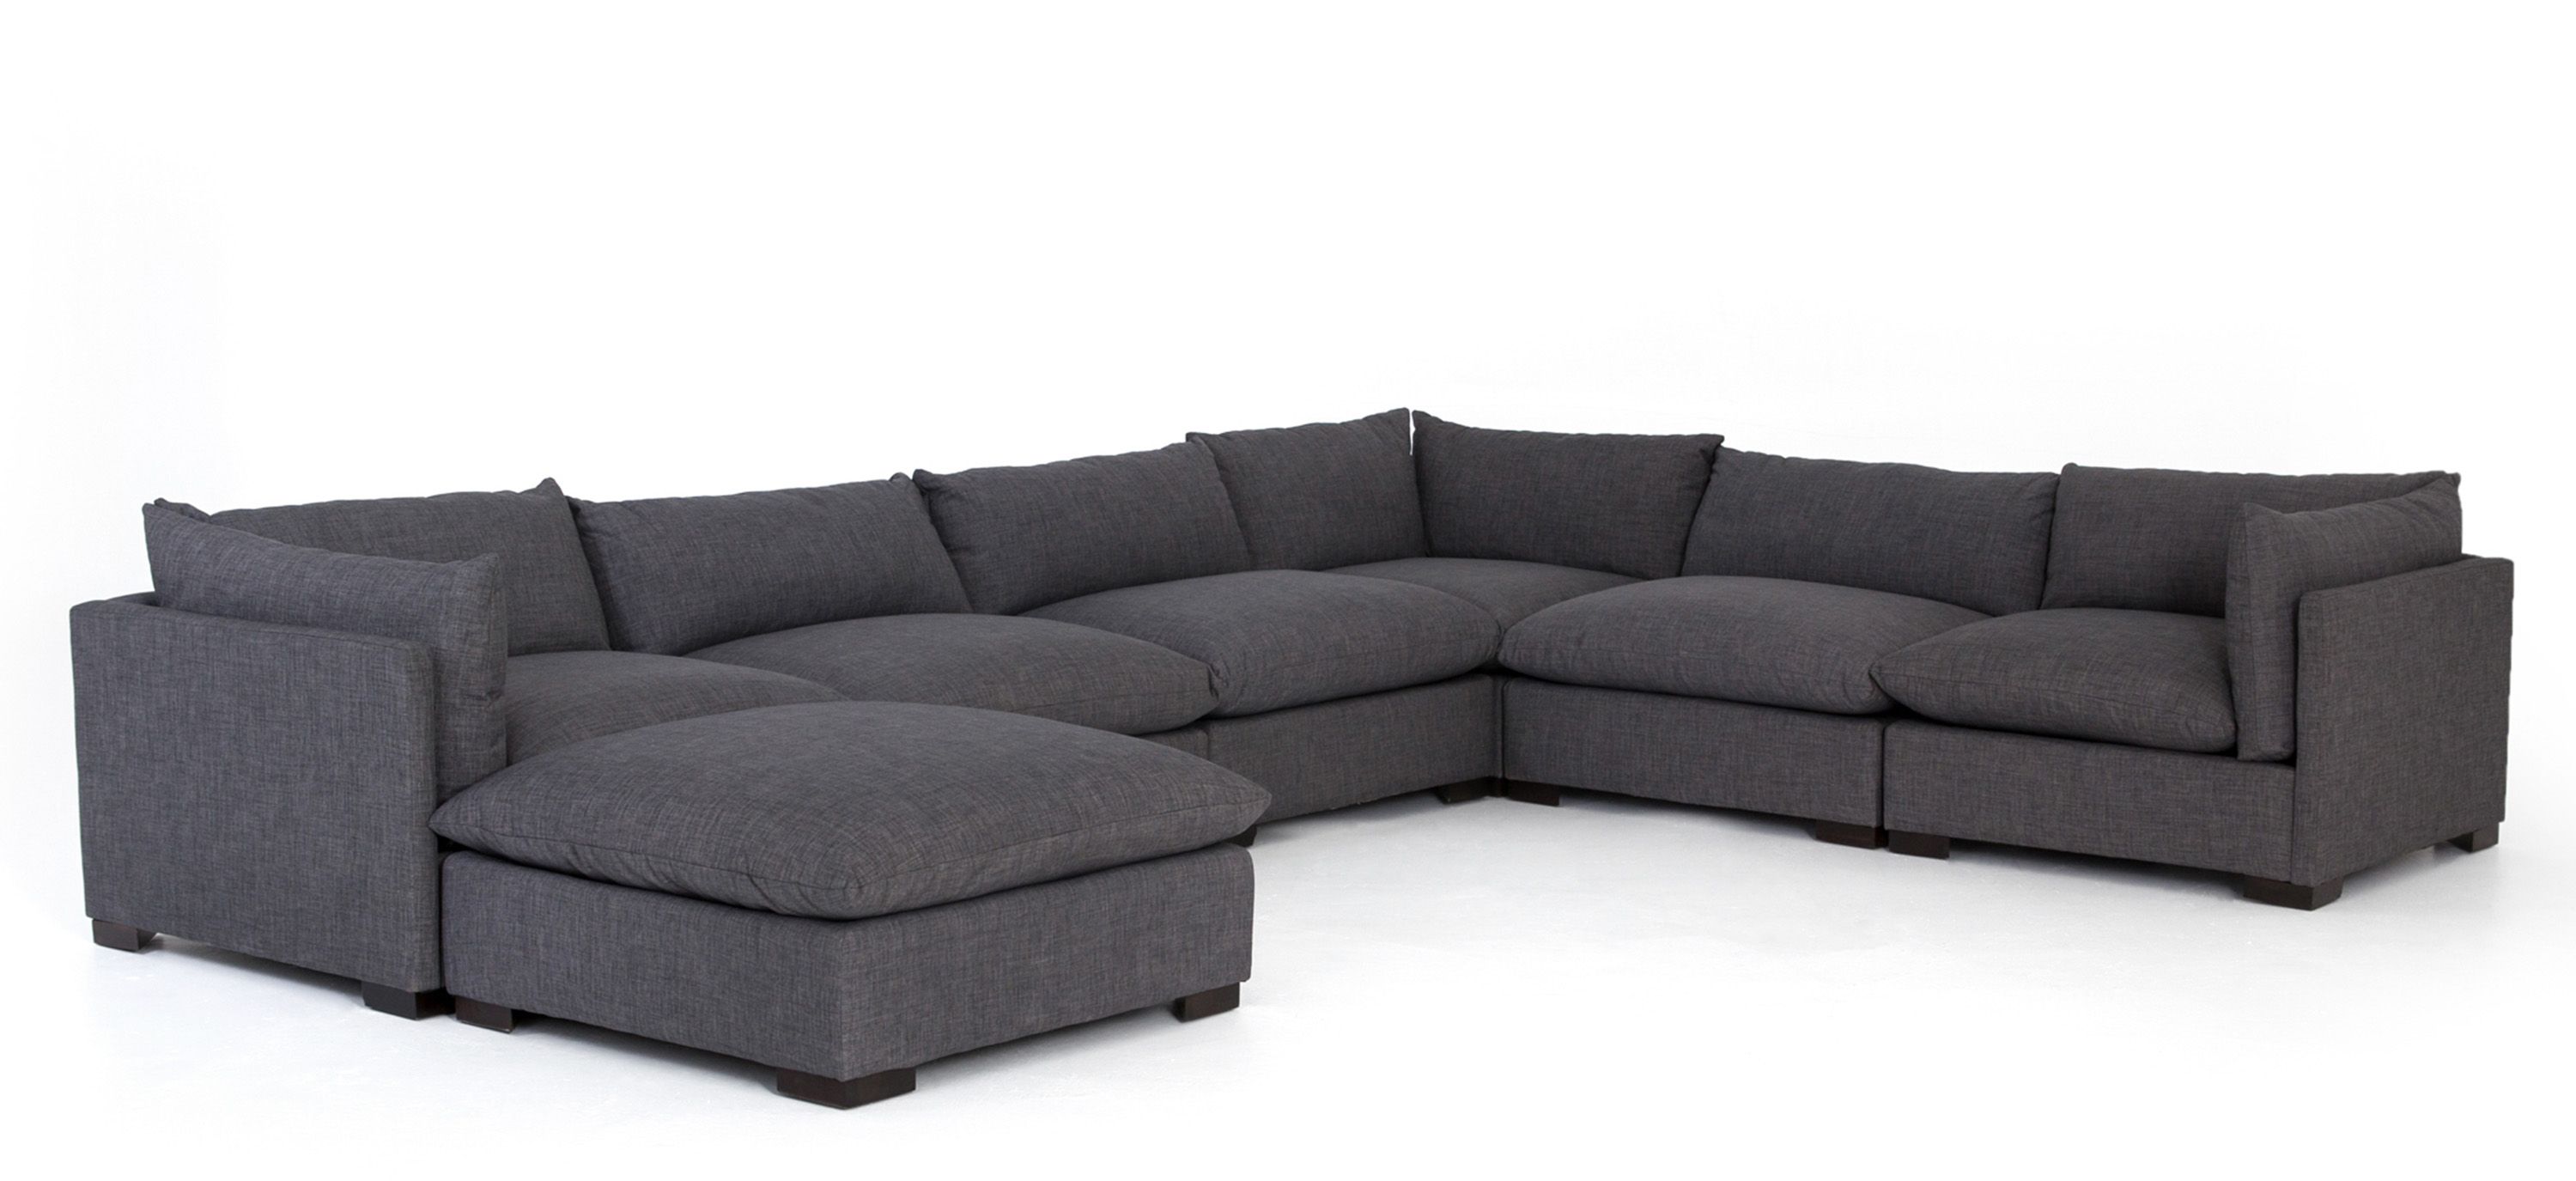 Westwood 7-pc. Modular Sectional Sofa w/ Ottoman